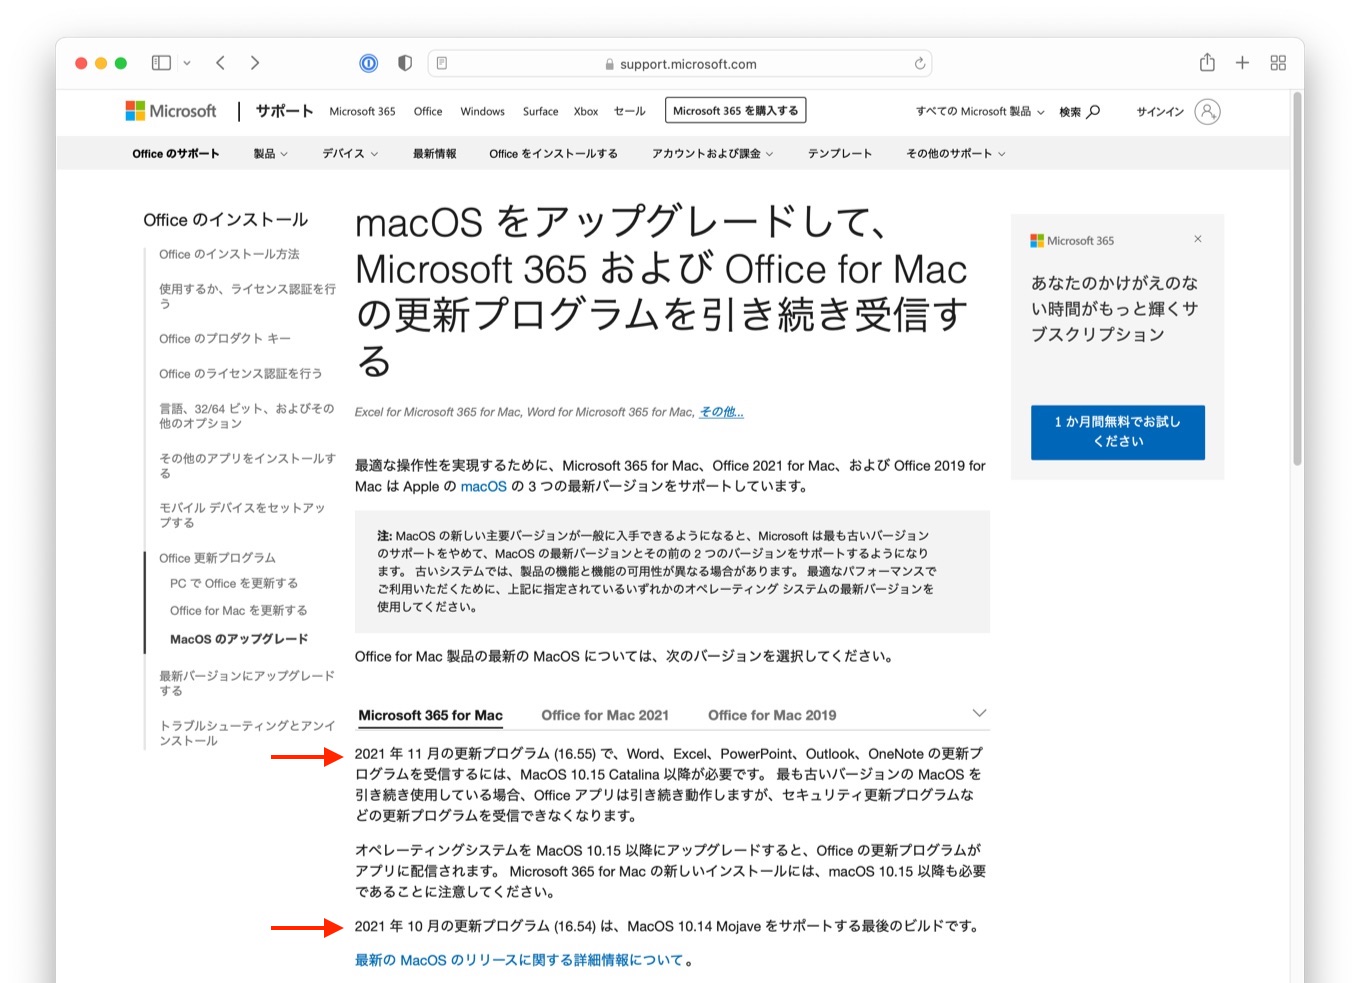 macOS 10.14 MojaveでMicrosoft Office 2019 for Macのサポートが終了